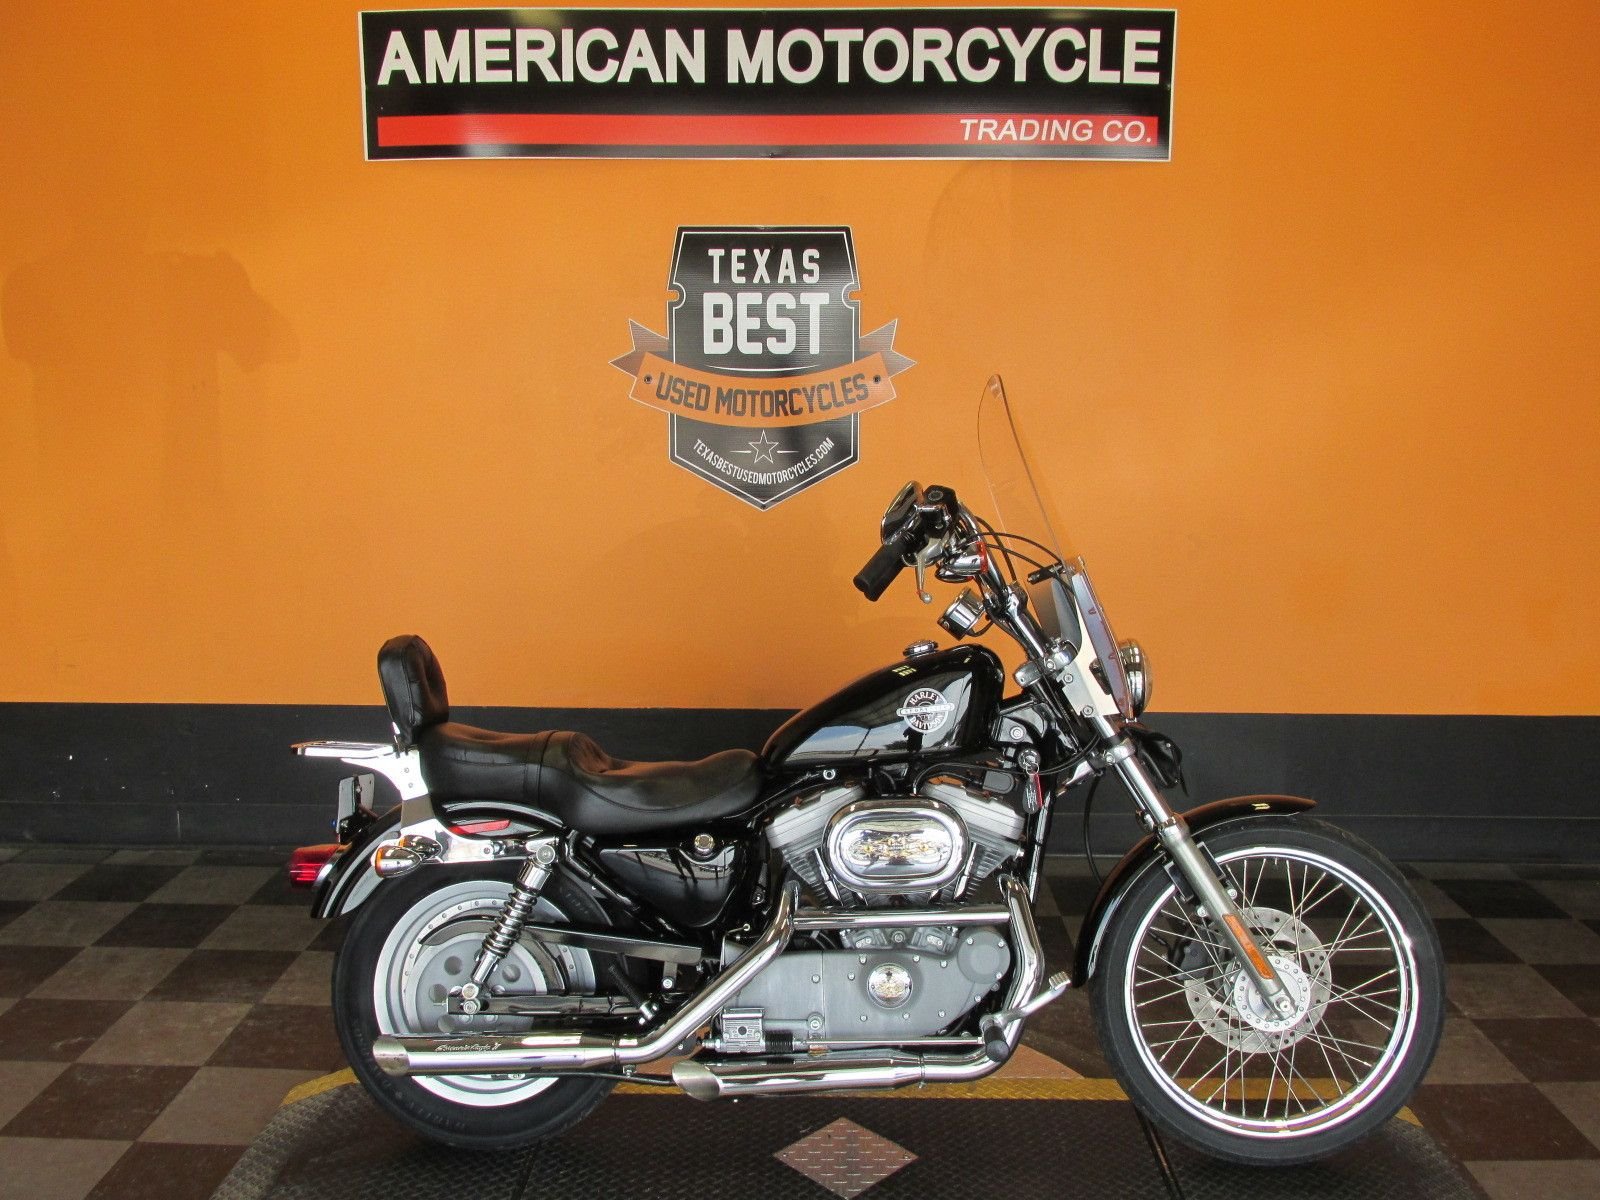 2002 Harley-Davidson Sportster 883 | American Motorcycle Trading Company -  Used Harley Davidson Motorcycles